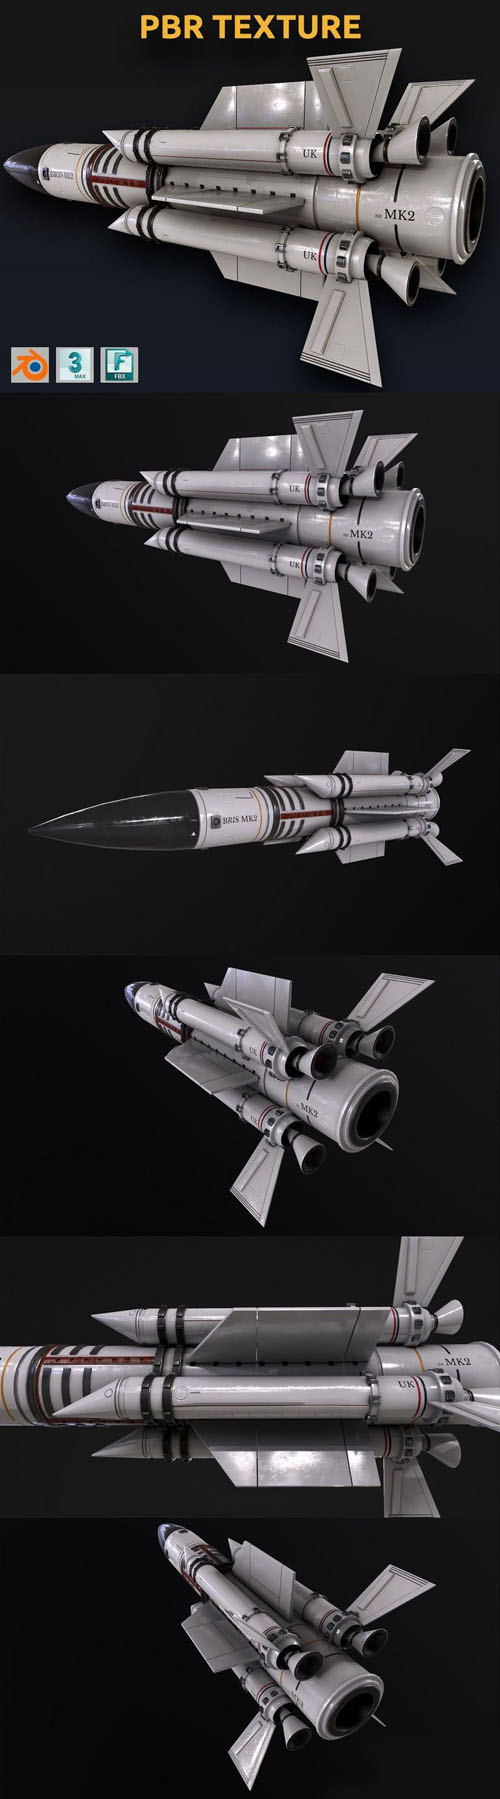 Rocket spaceship - 3d model